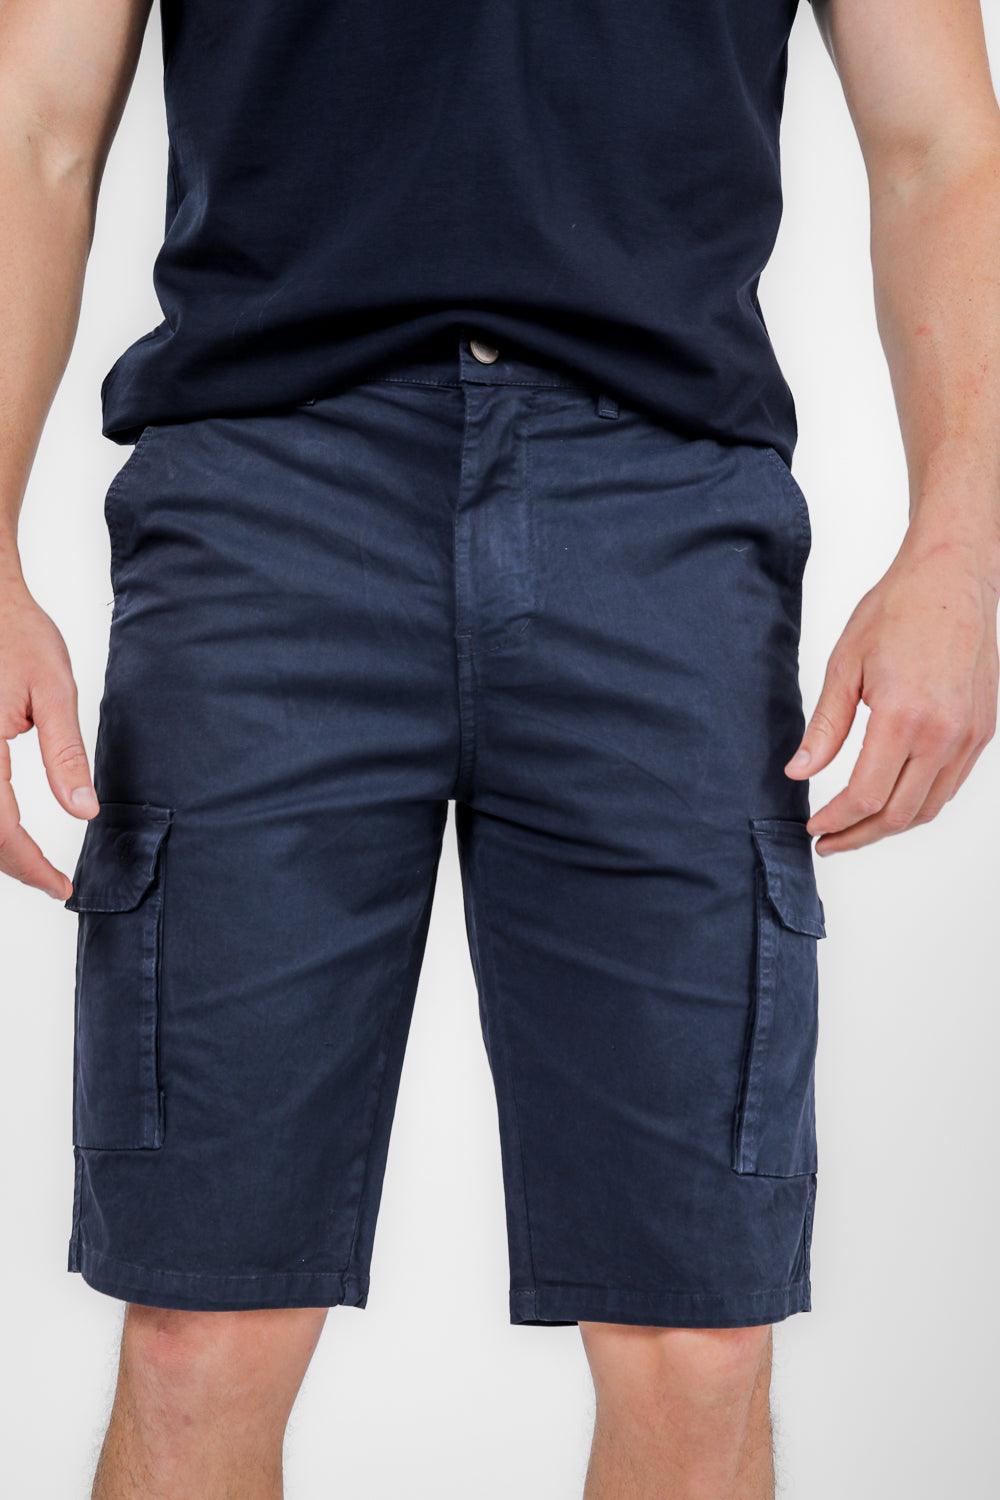 SCORCHER - מכנסי ברמודה CLASSIC בצבע נייבי - MASHBIR//365